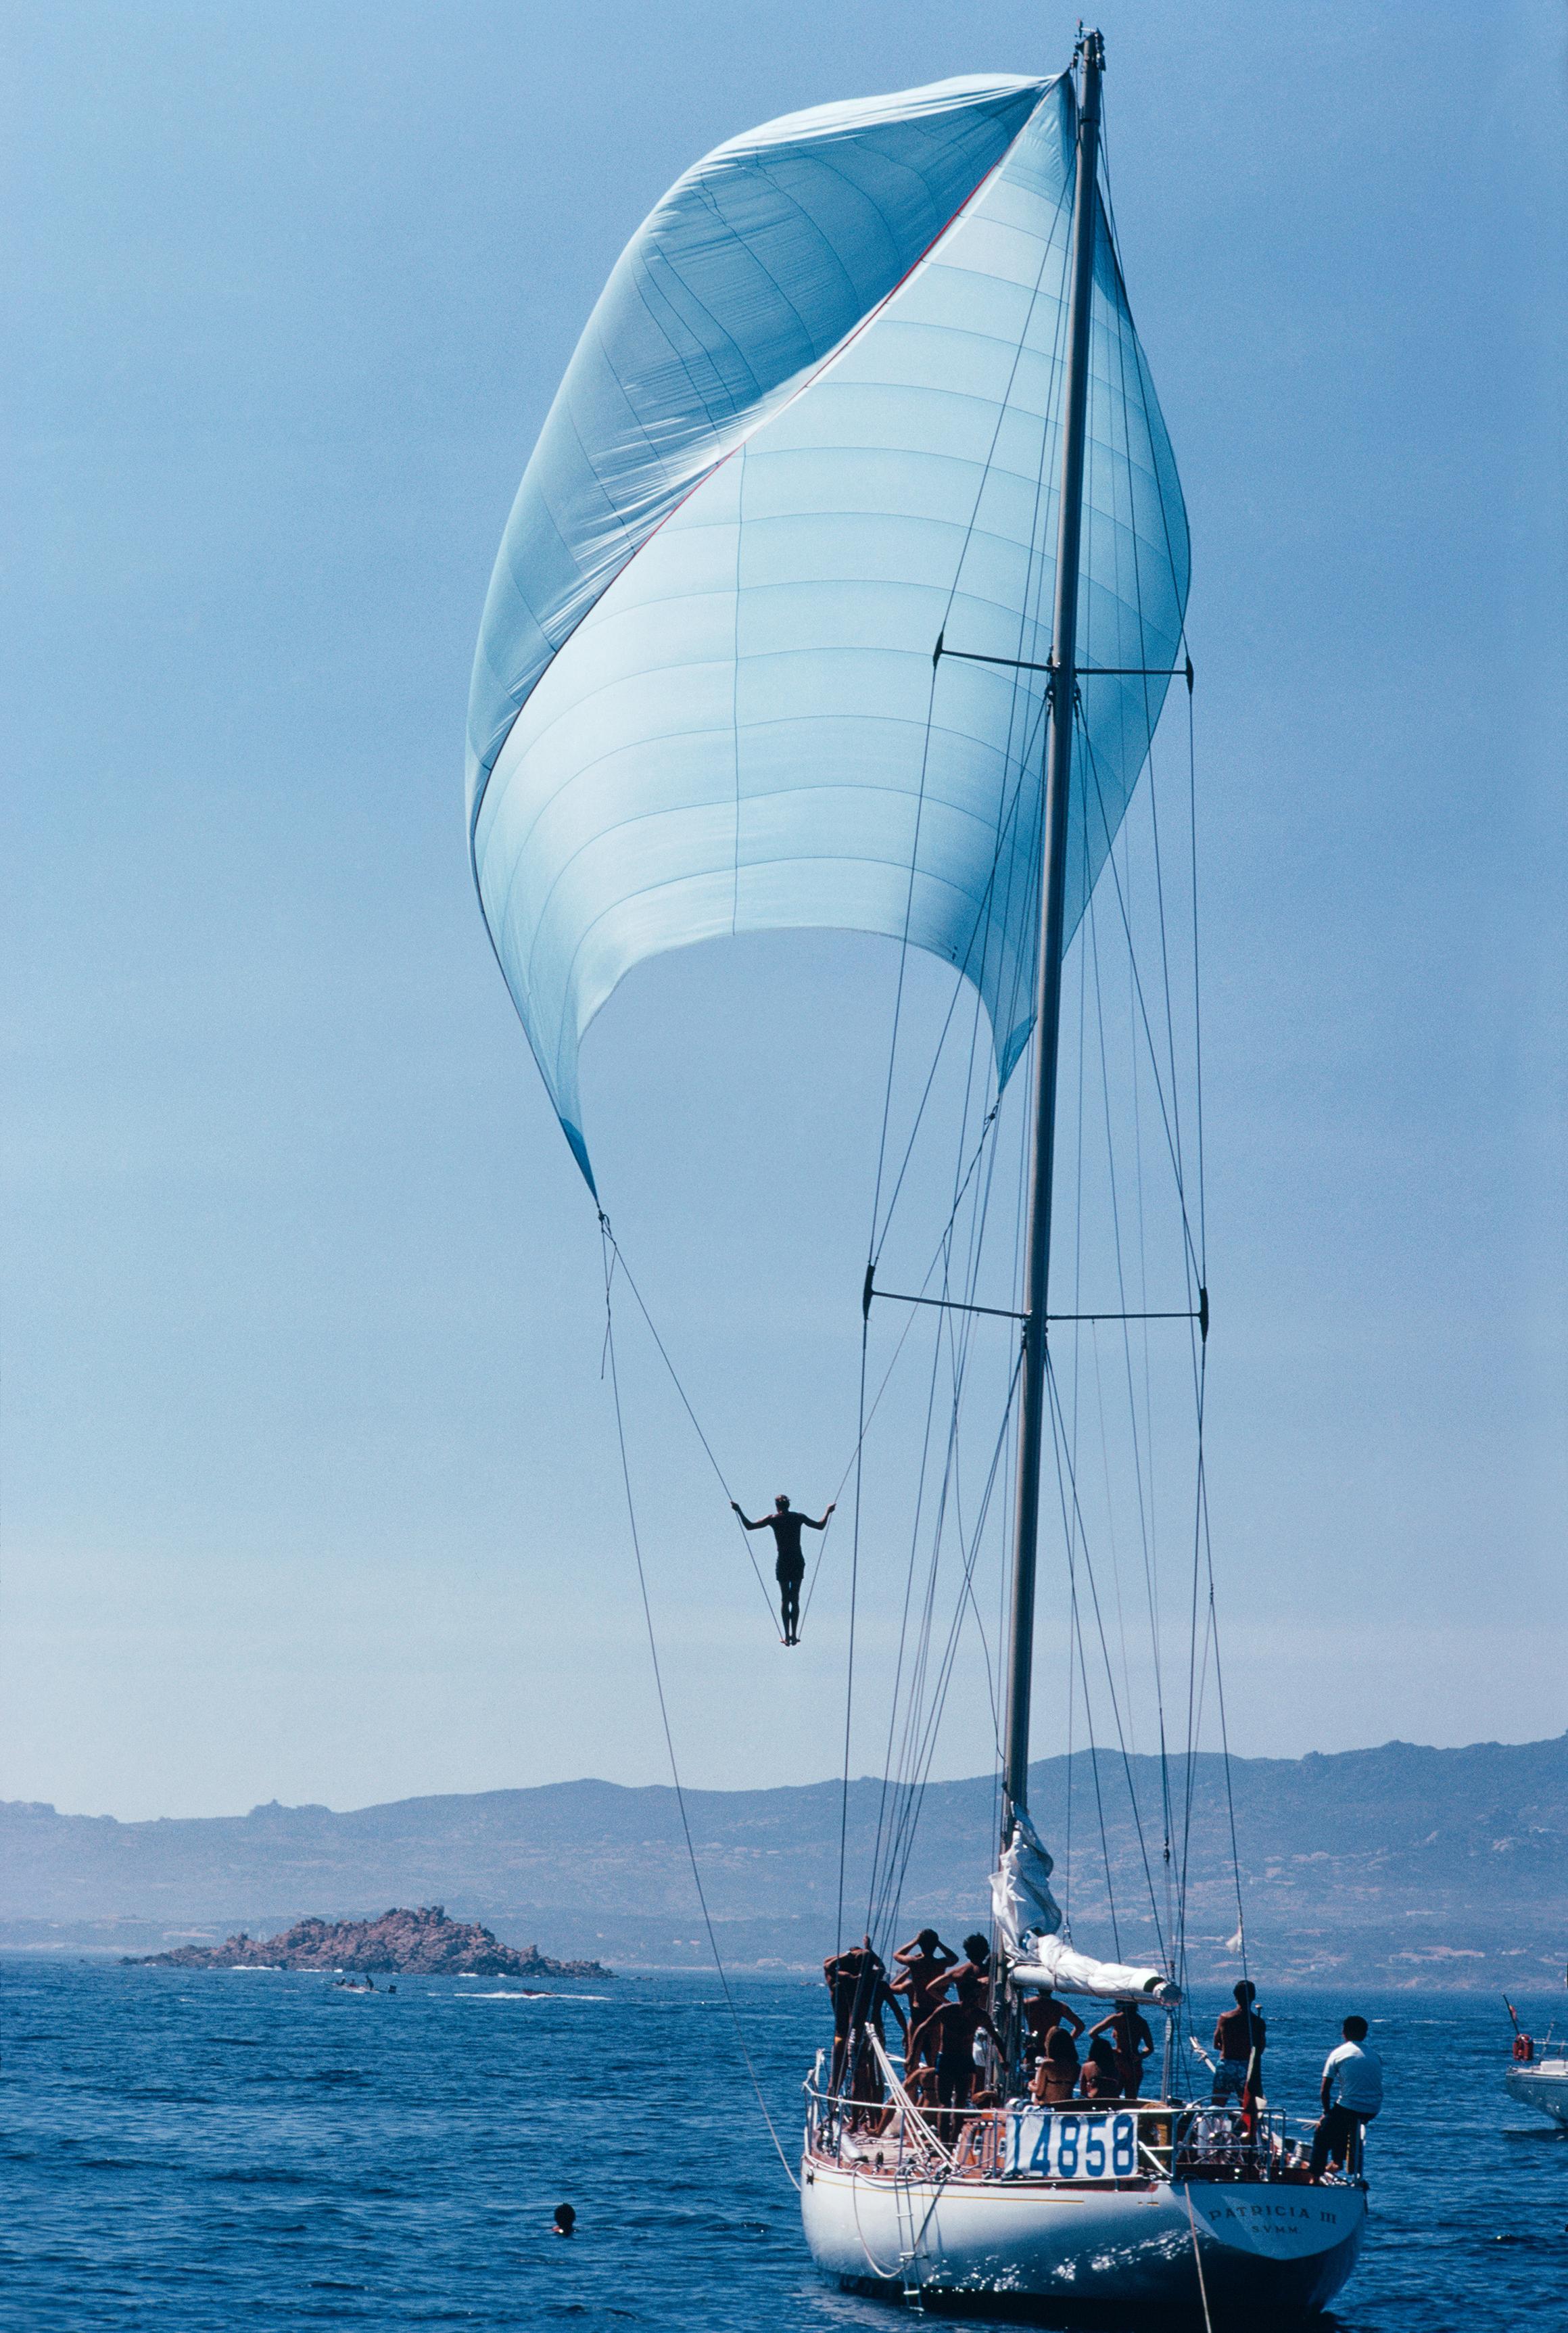 Slim Aarons Landscape Photograph - Spinnaker Sailing, Estate Edition)